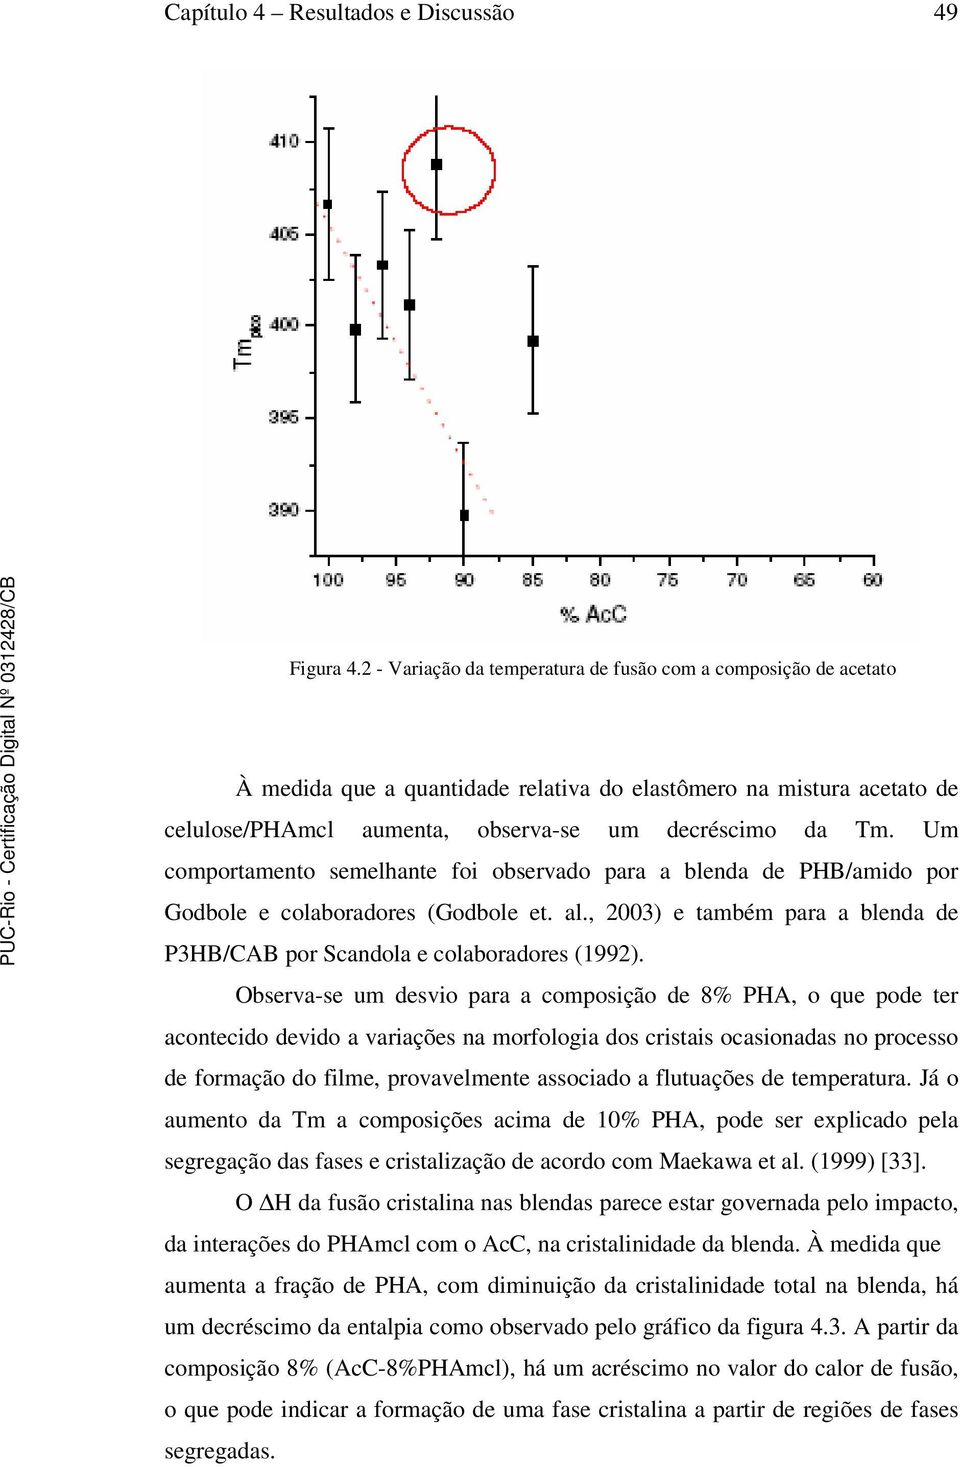 Um comportamento semelhante foi observado para a blenda de PHB/amido por Godbole e colaboradores (Godbole et. al., 2003) e também para a blenda de P3HB/CAB por Scandola e colaboradores (1992).